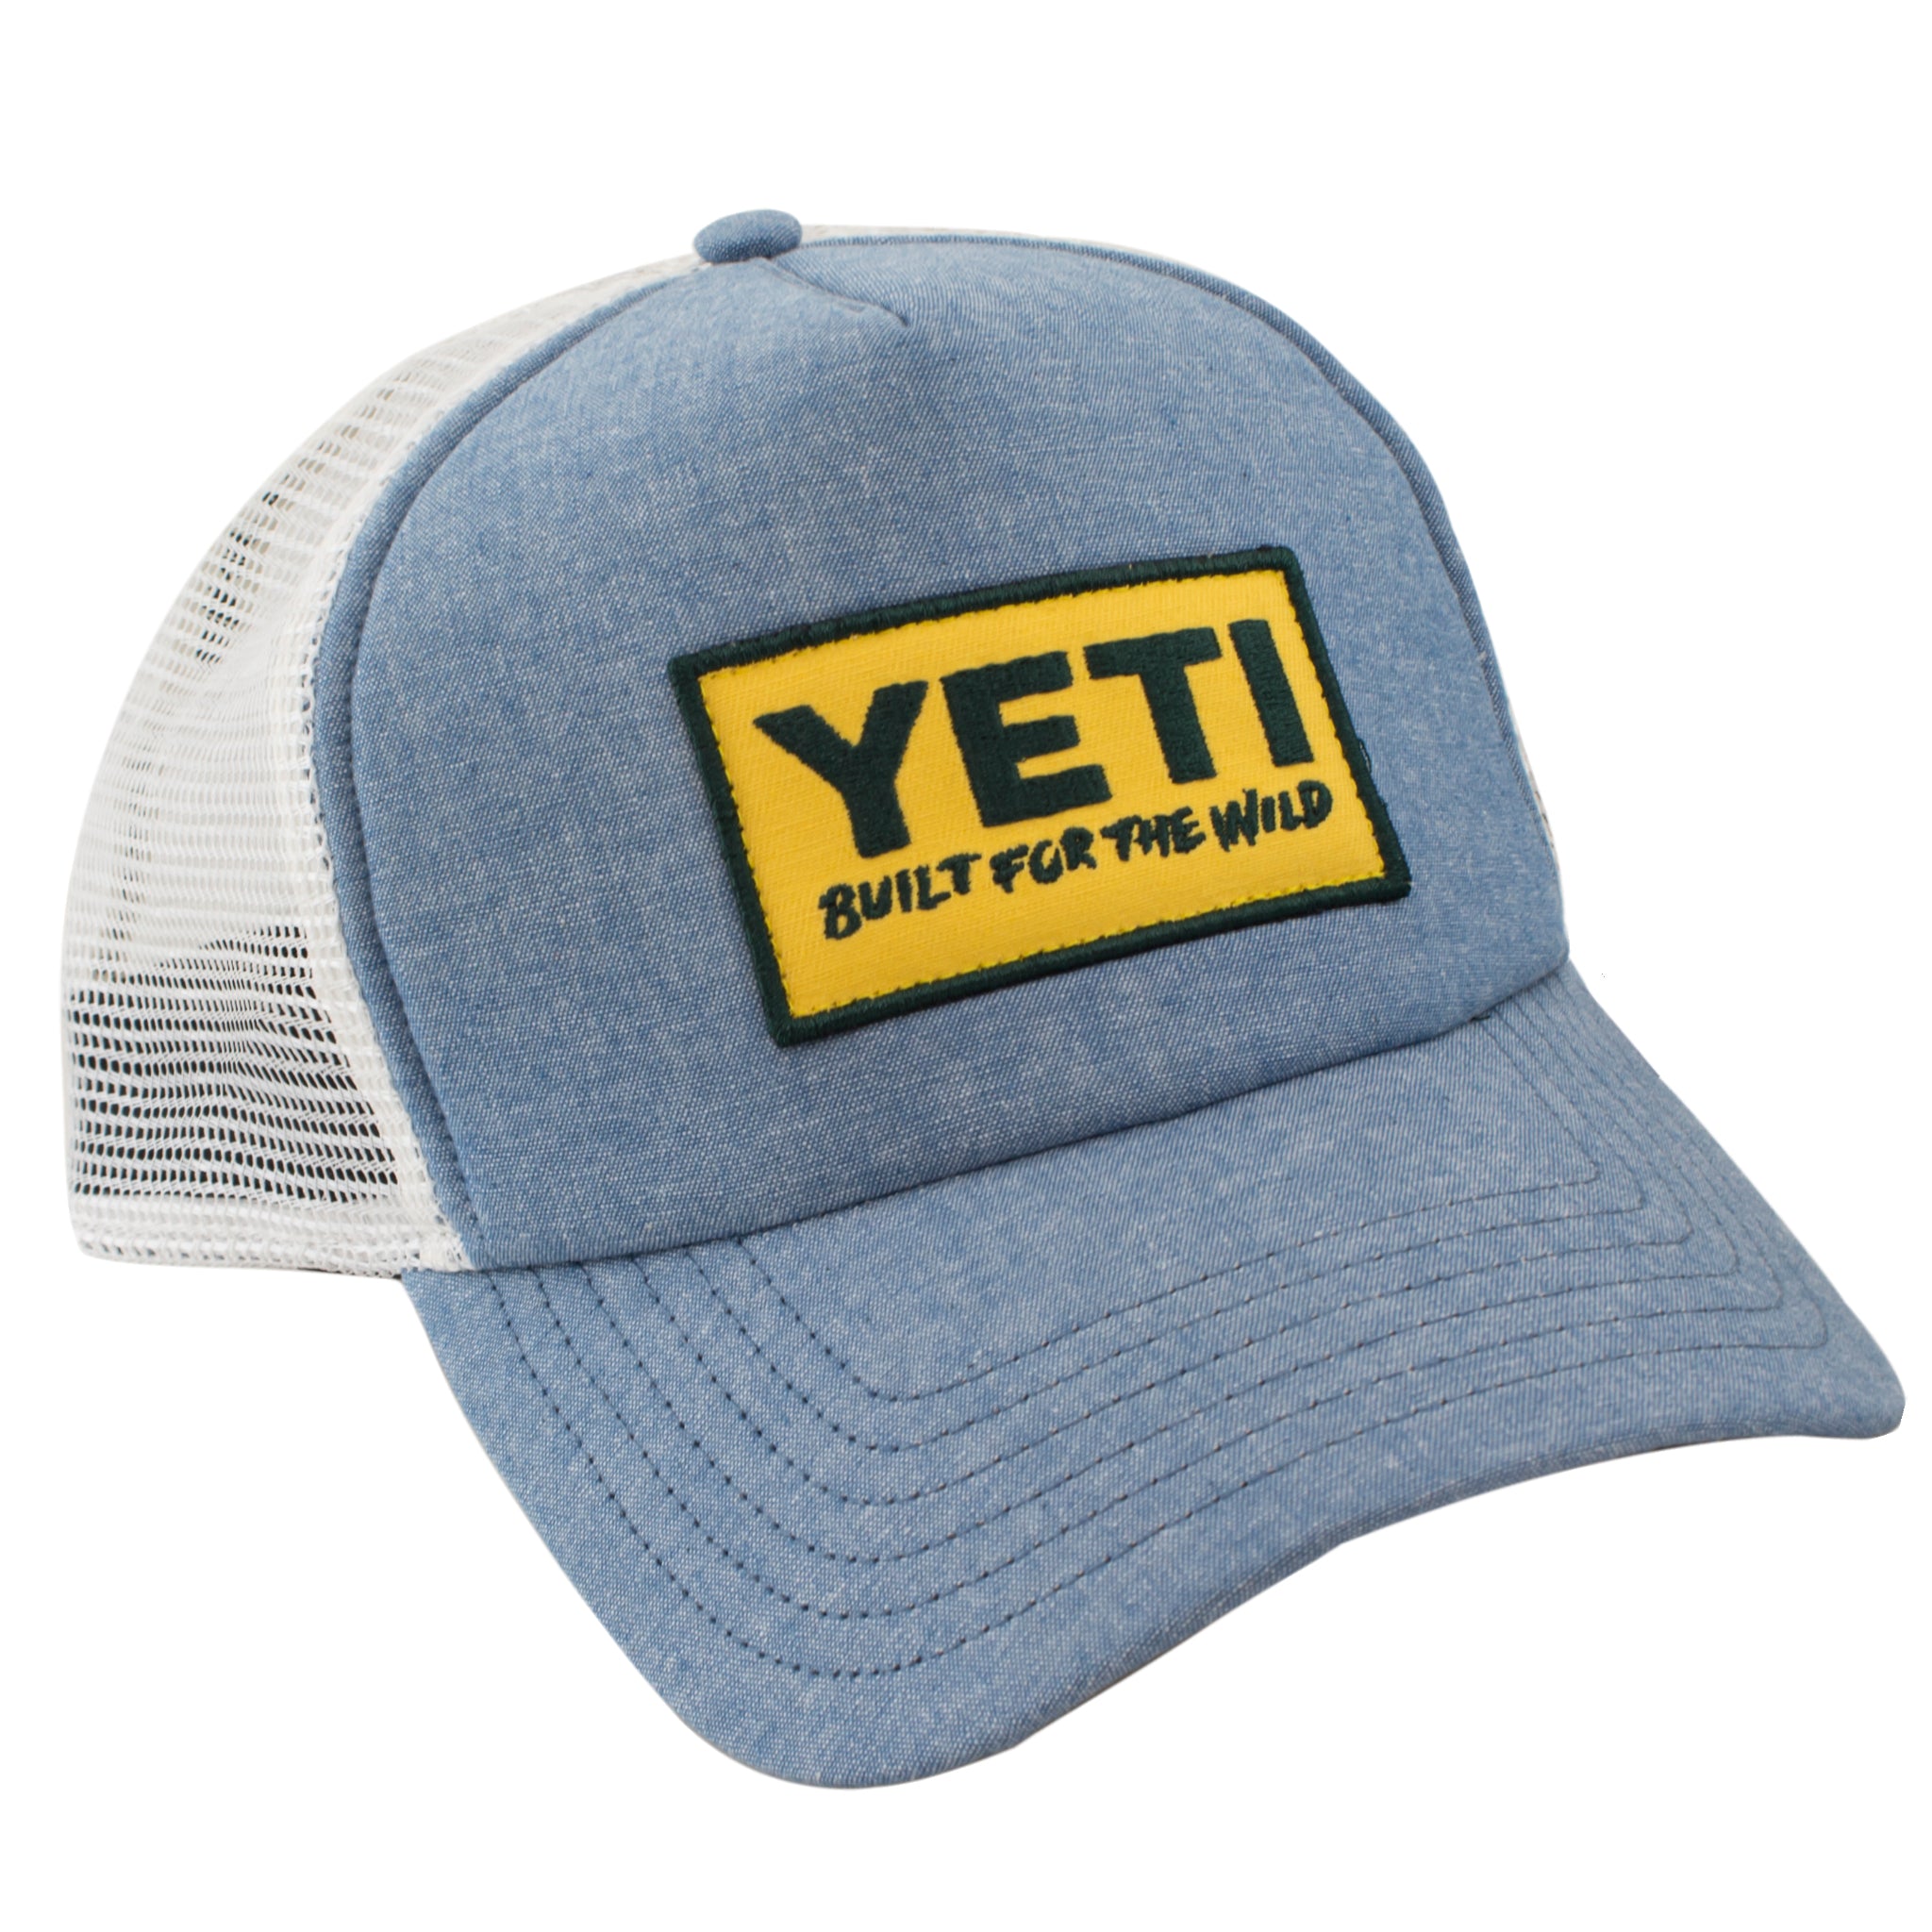 Yeti Coolers Men's Traditional Trucker Mesh-Backed Cap – Good's Store Online